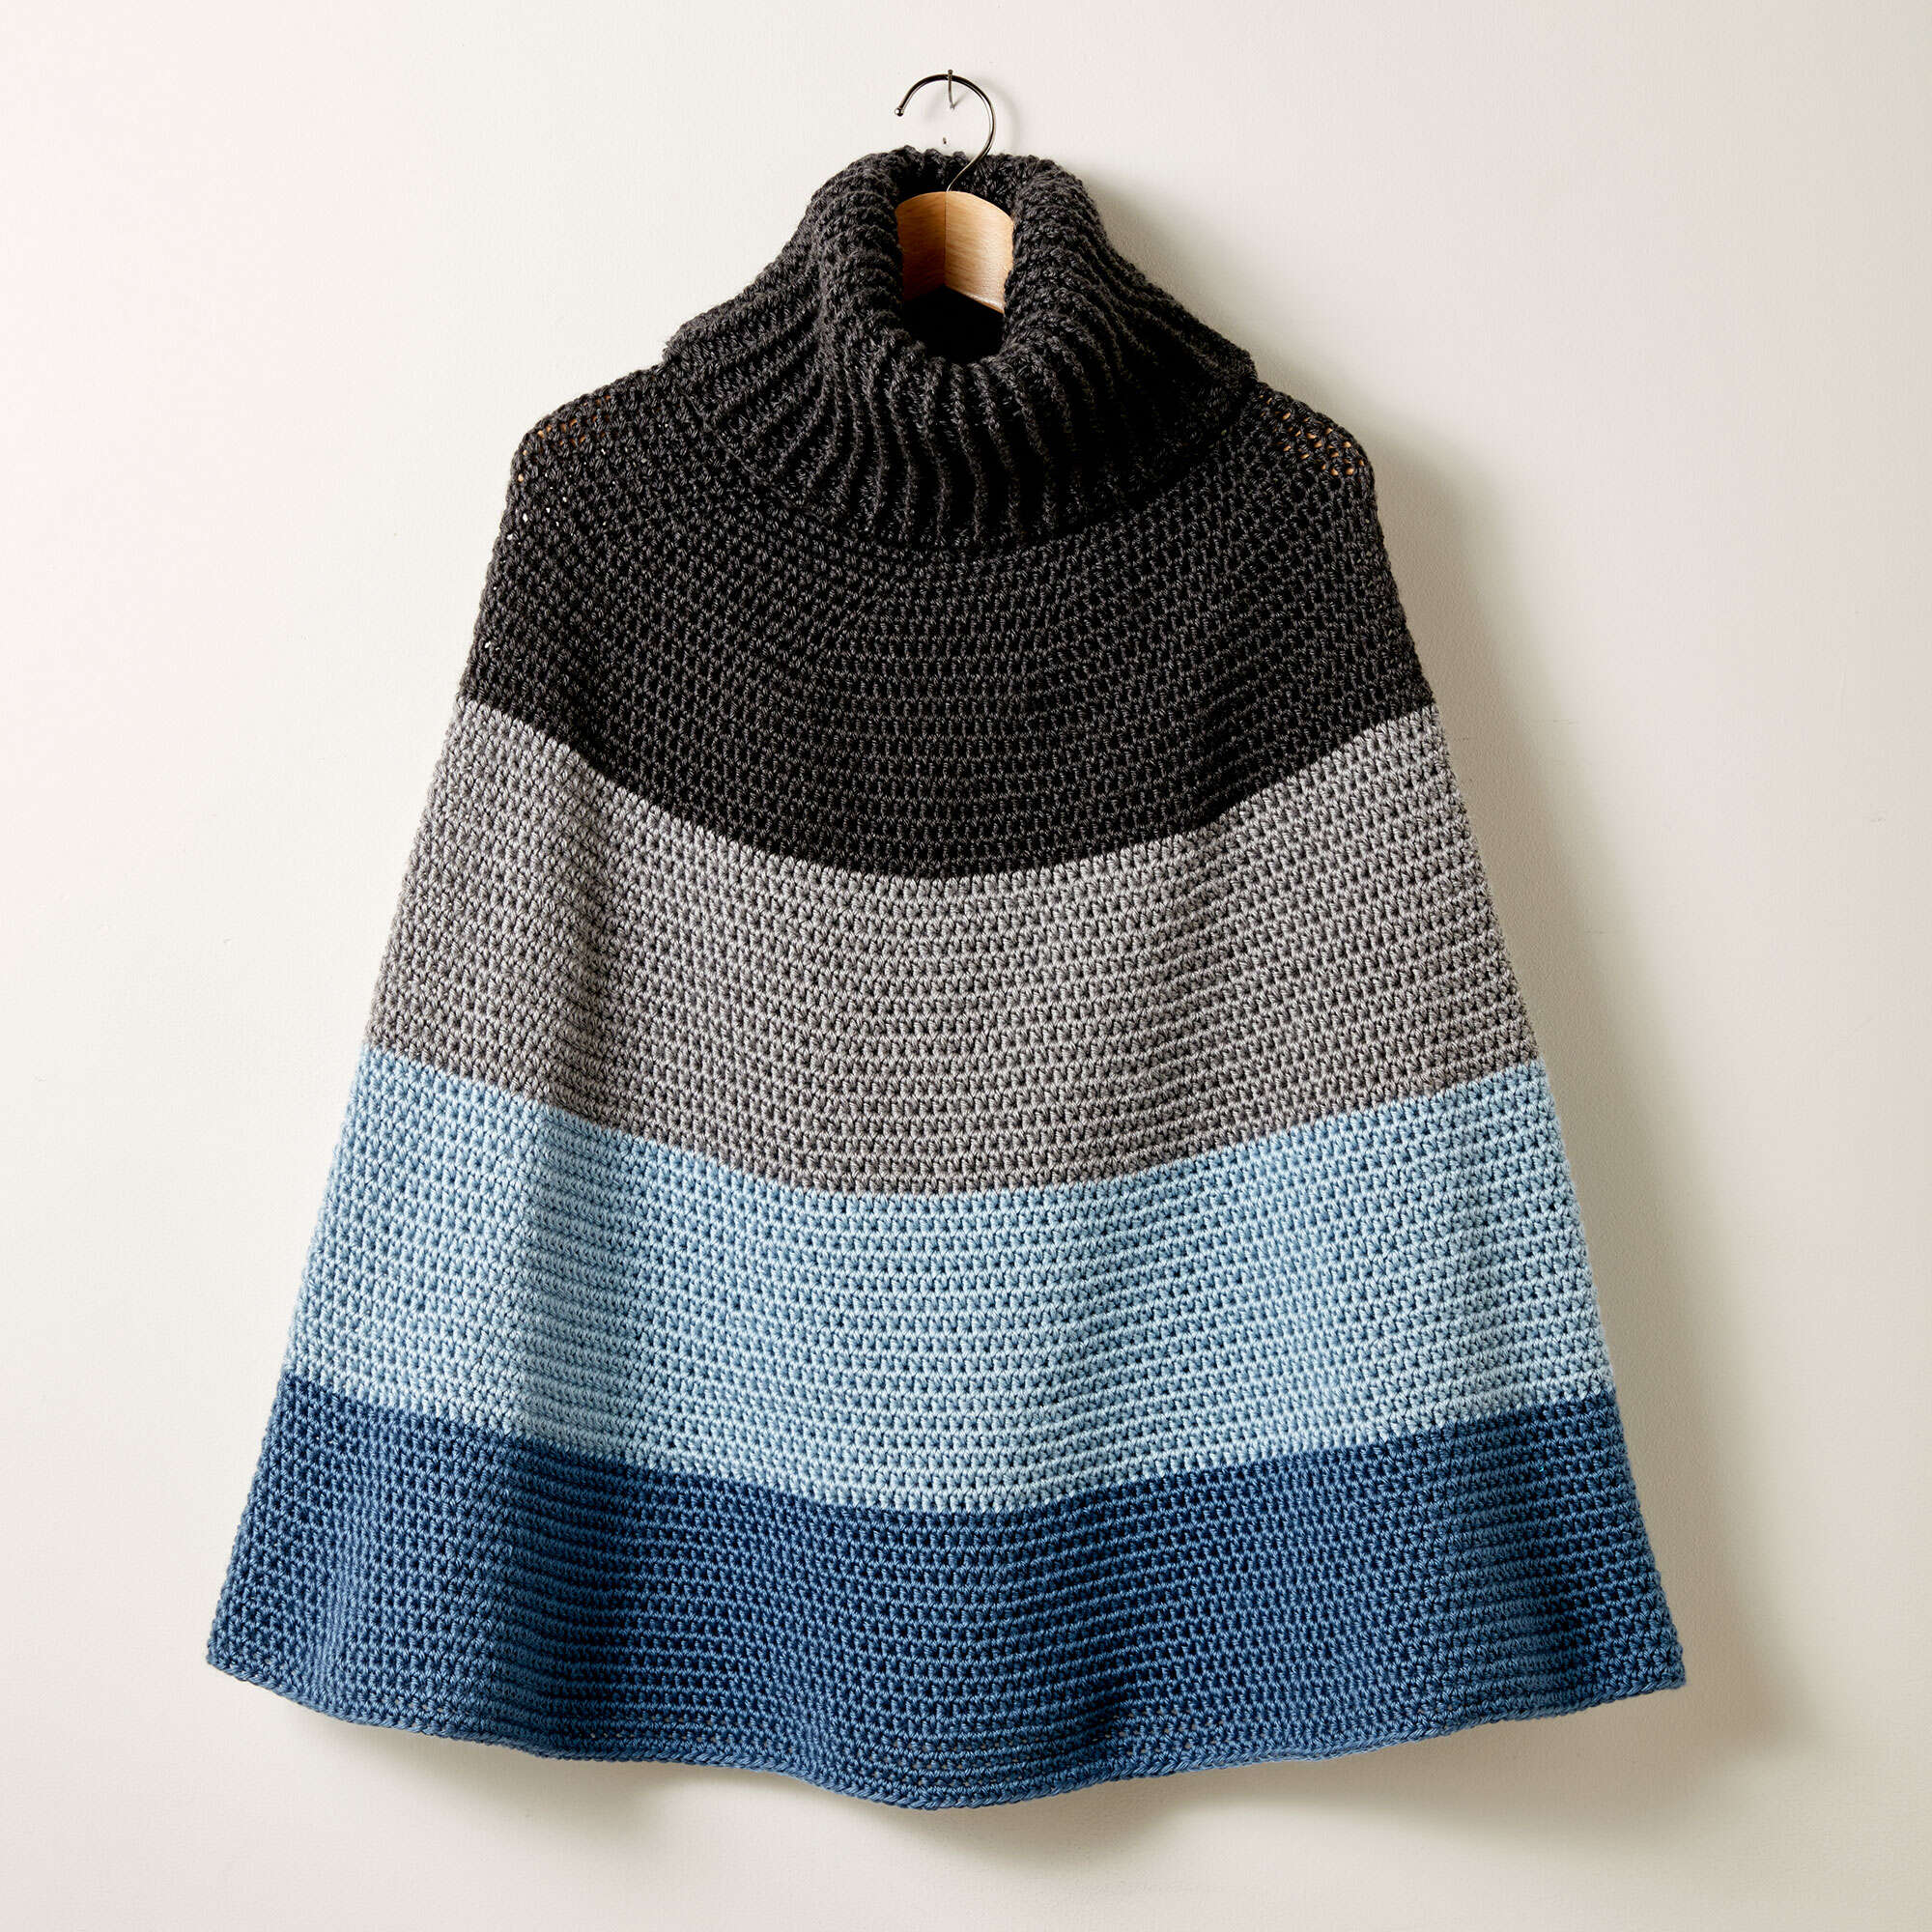 Free Pattern: Cozy Crochet Cowl Cape in Caron Simply Soft yarn